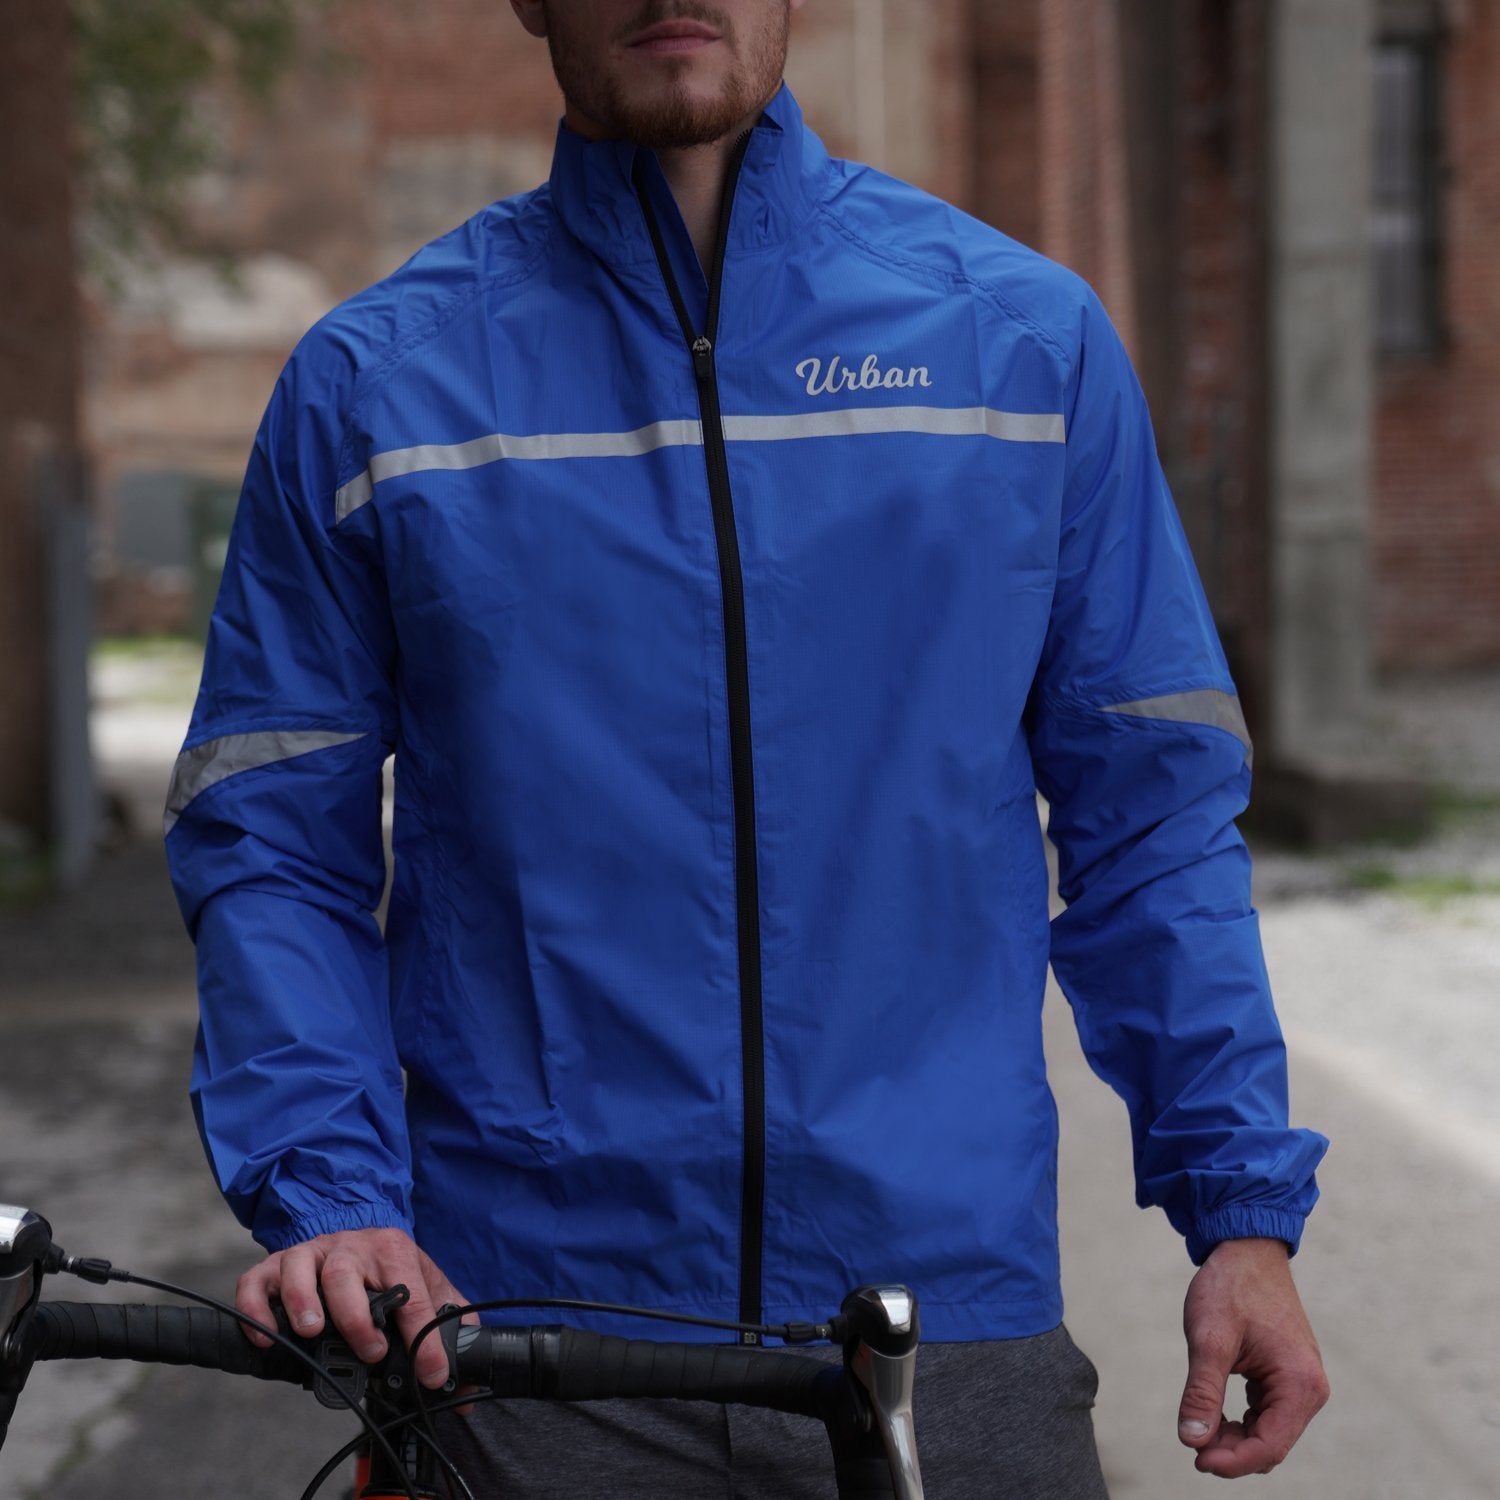 Urban Windproof & Waterproof Cycling Jacket Blue - Urban Cycling Apparel